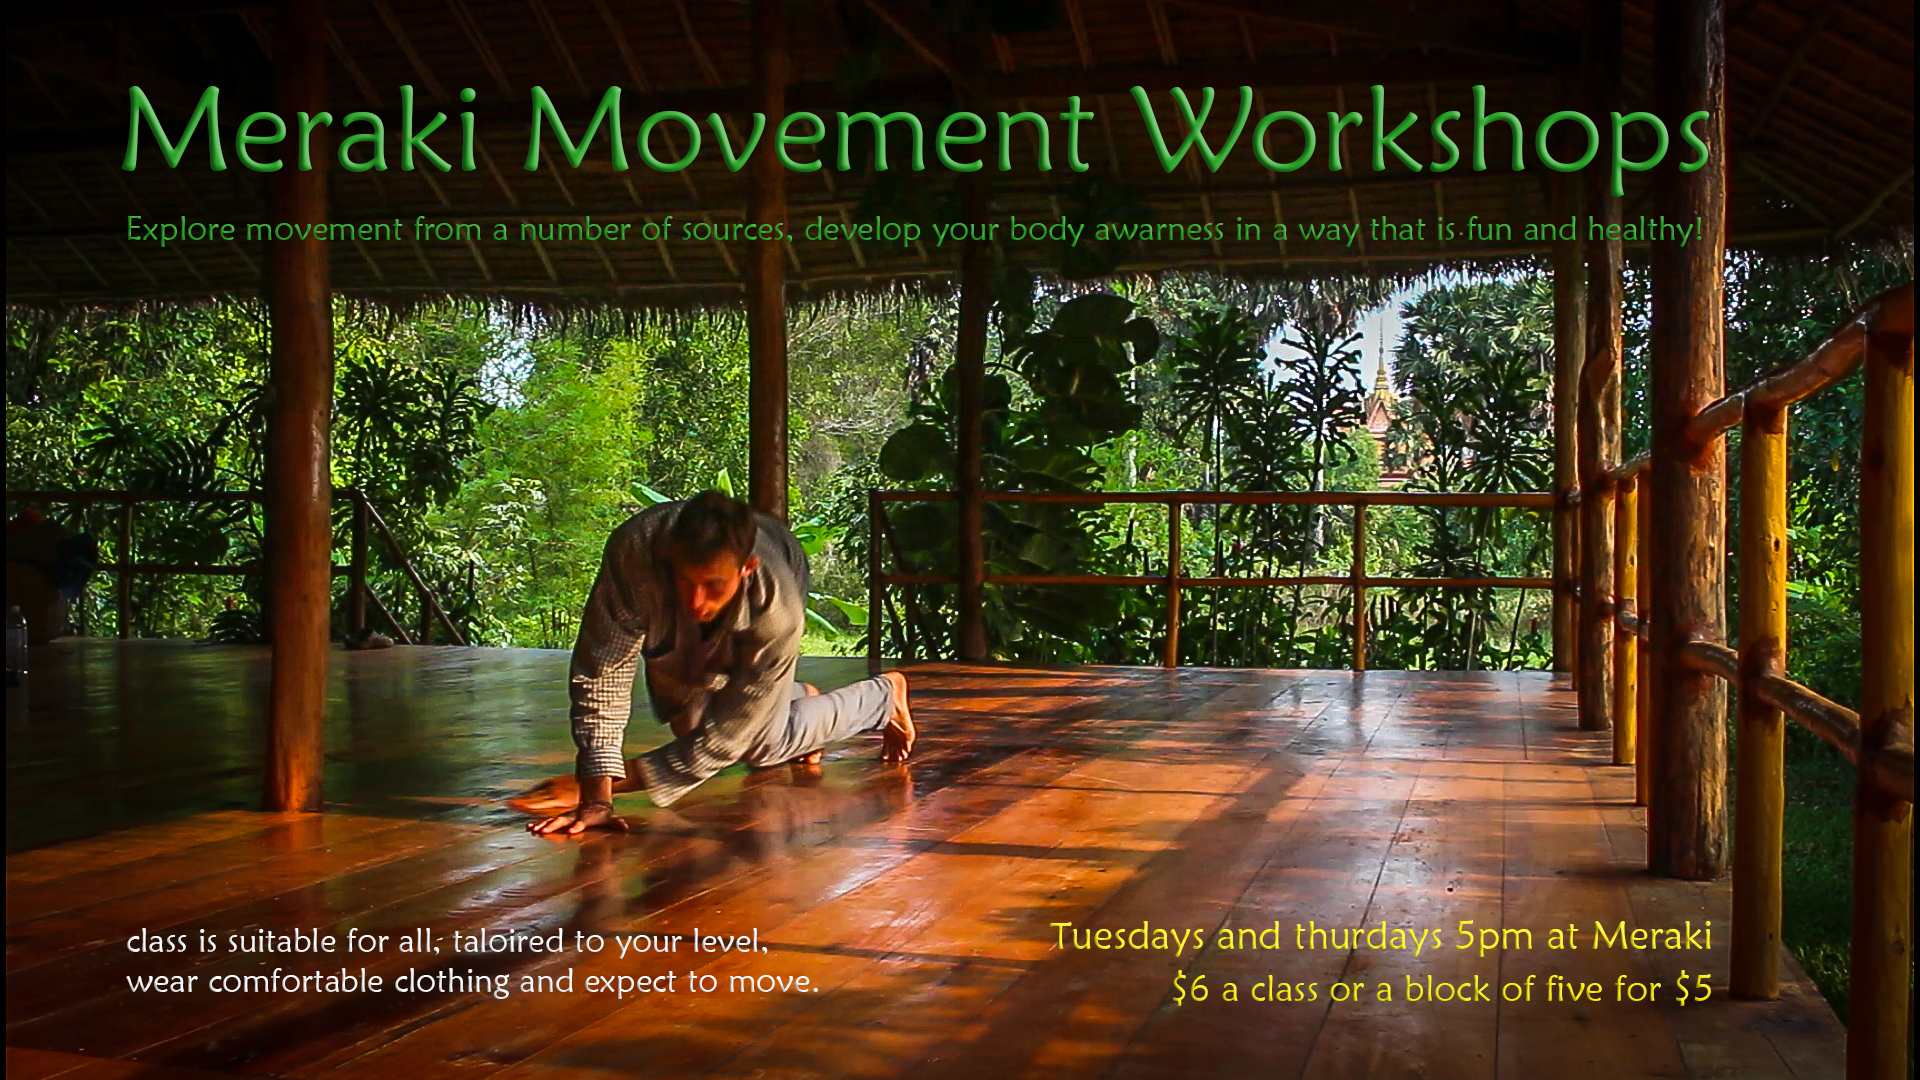 miraki movement flyer.jpg